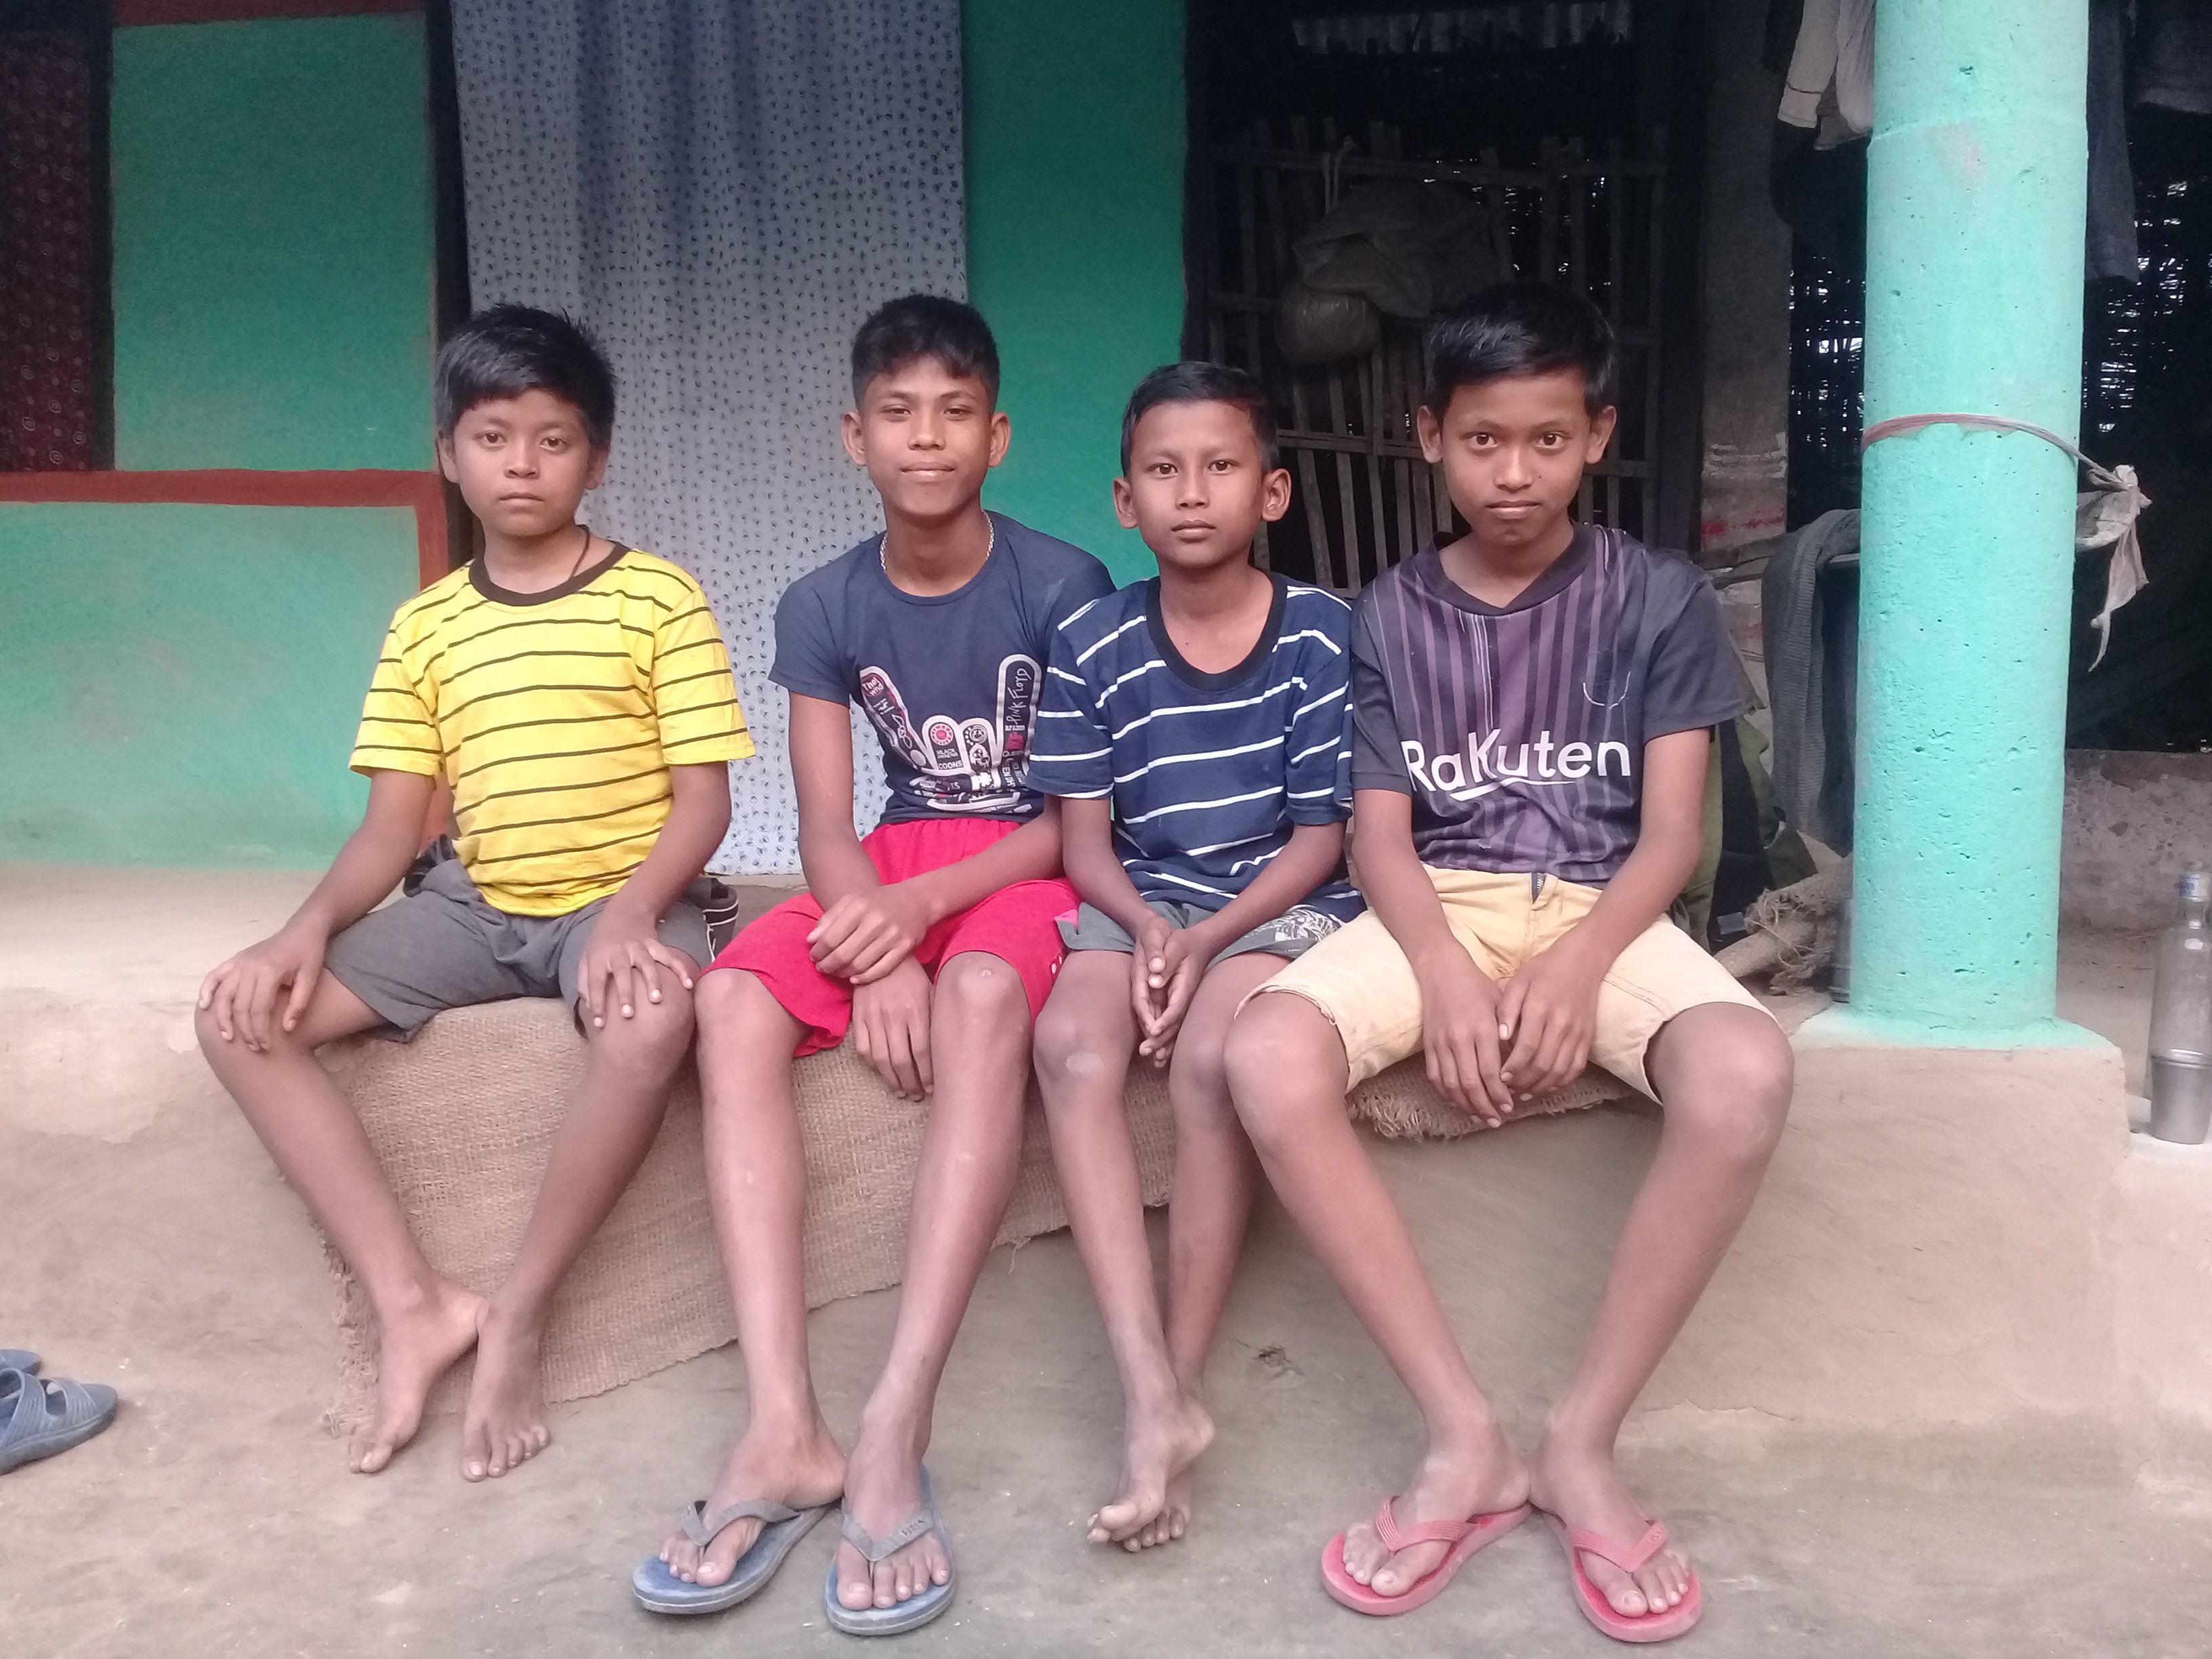 Adolescent boys in Nepal